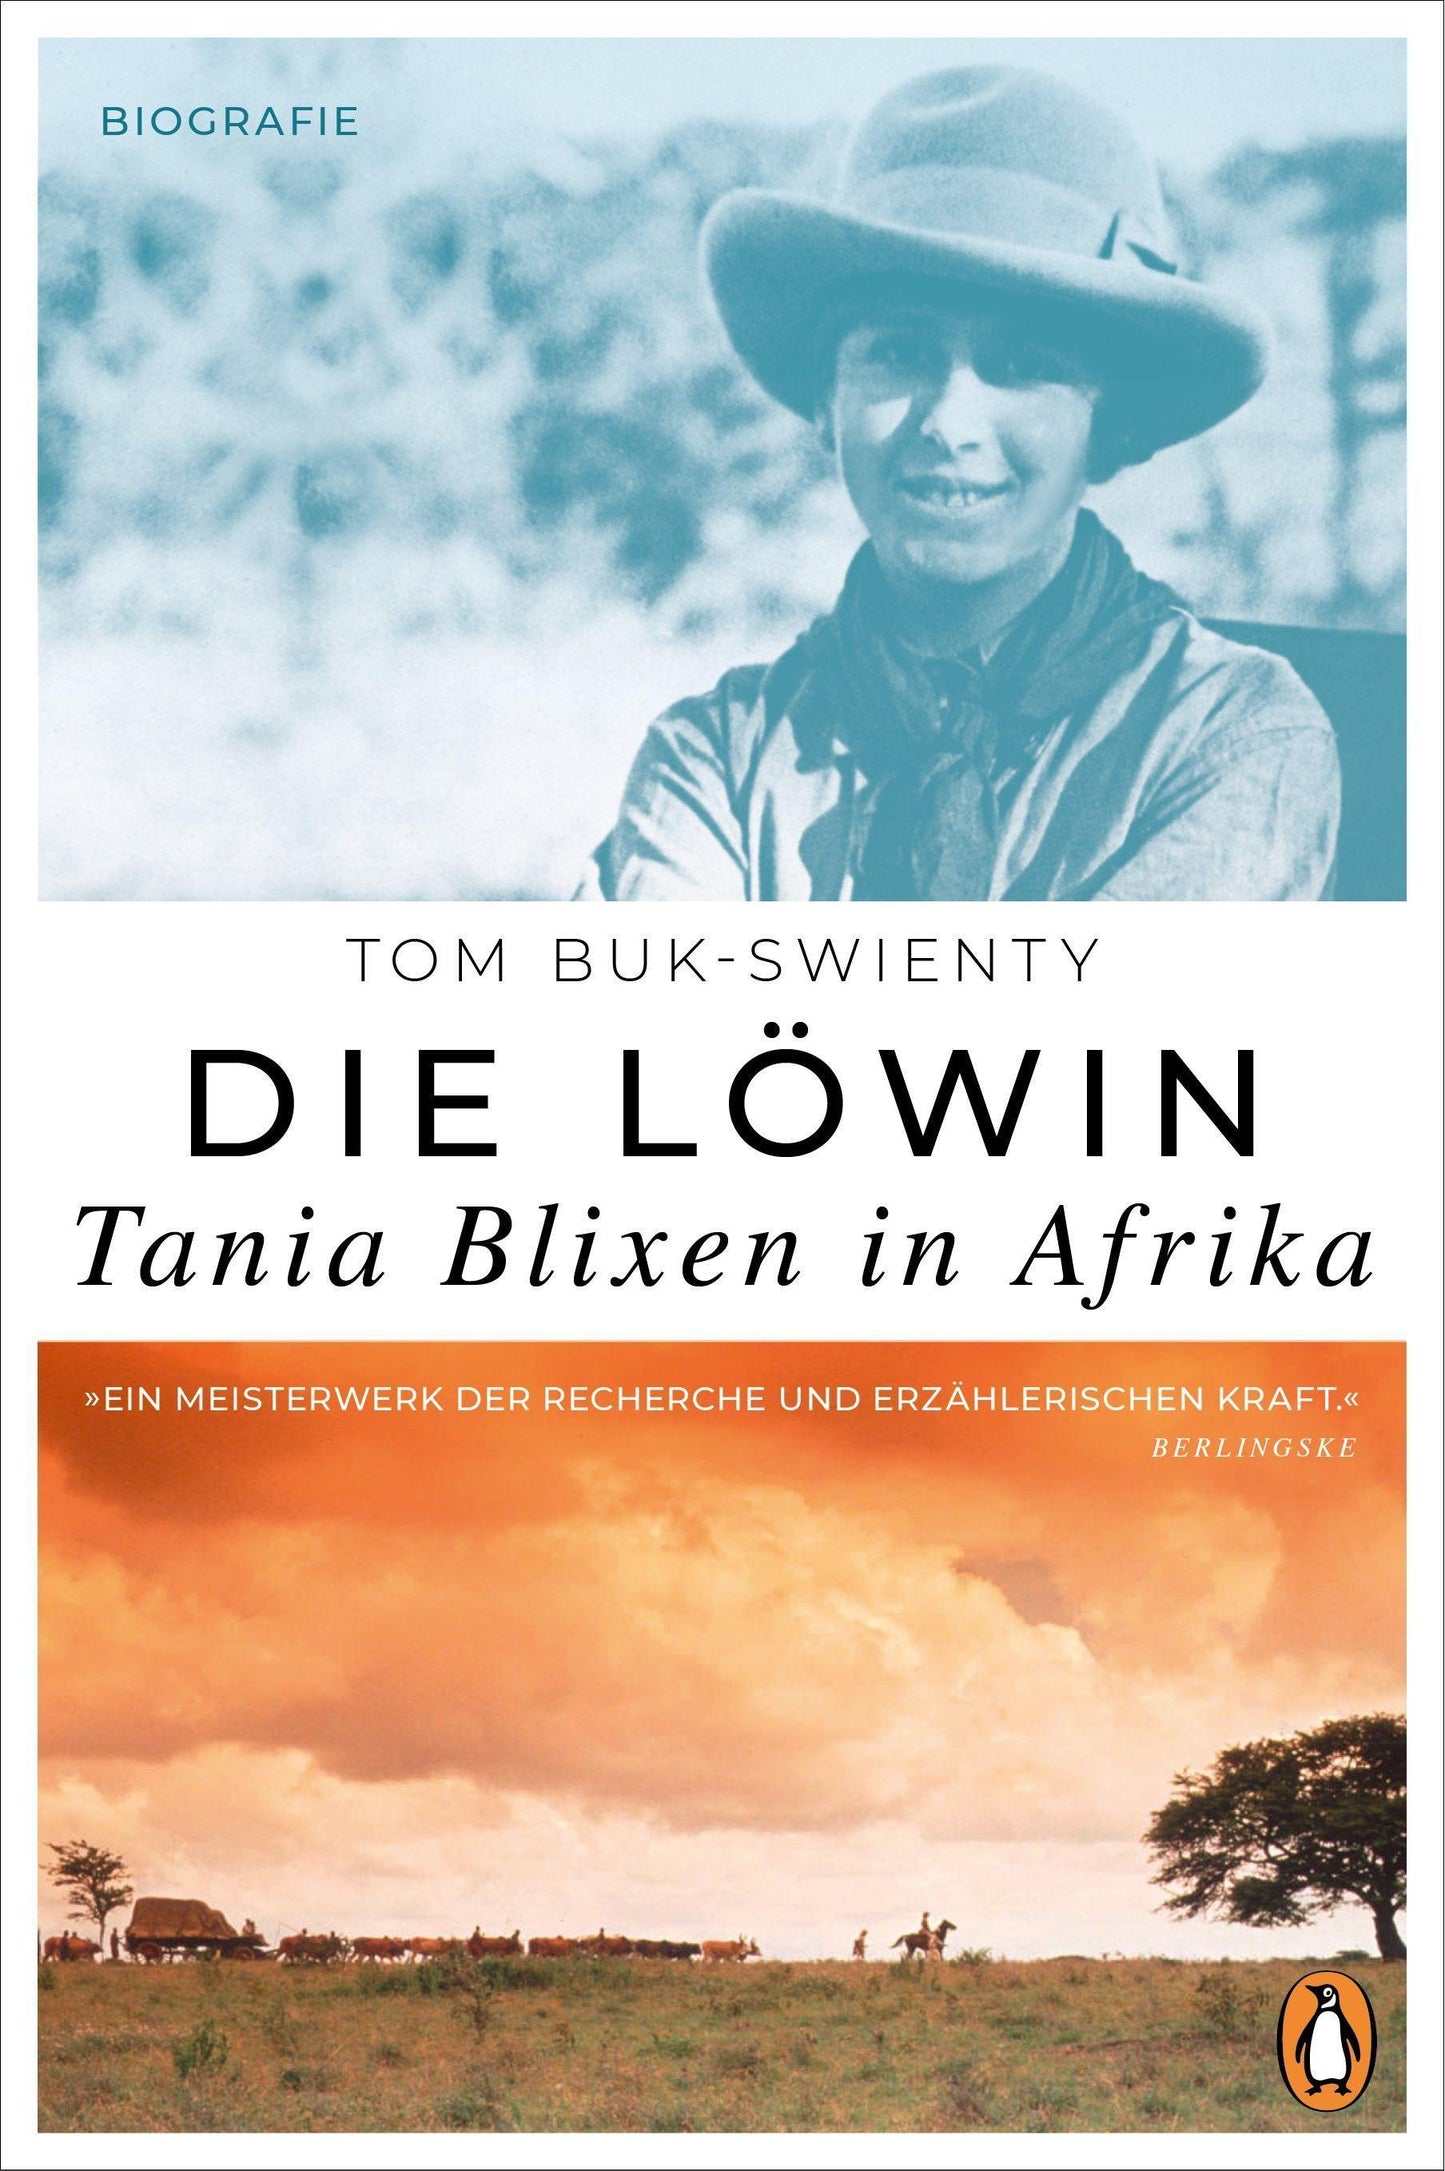 Die Löwin. Tania Blixen in Afrika: Biografie